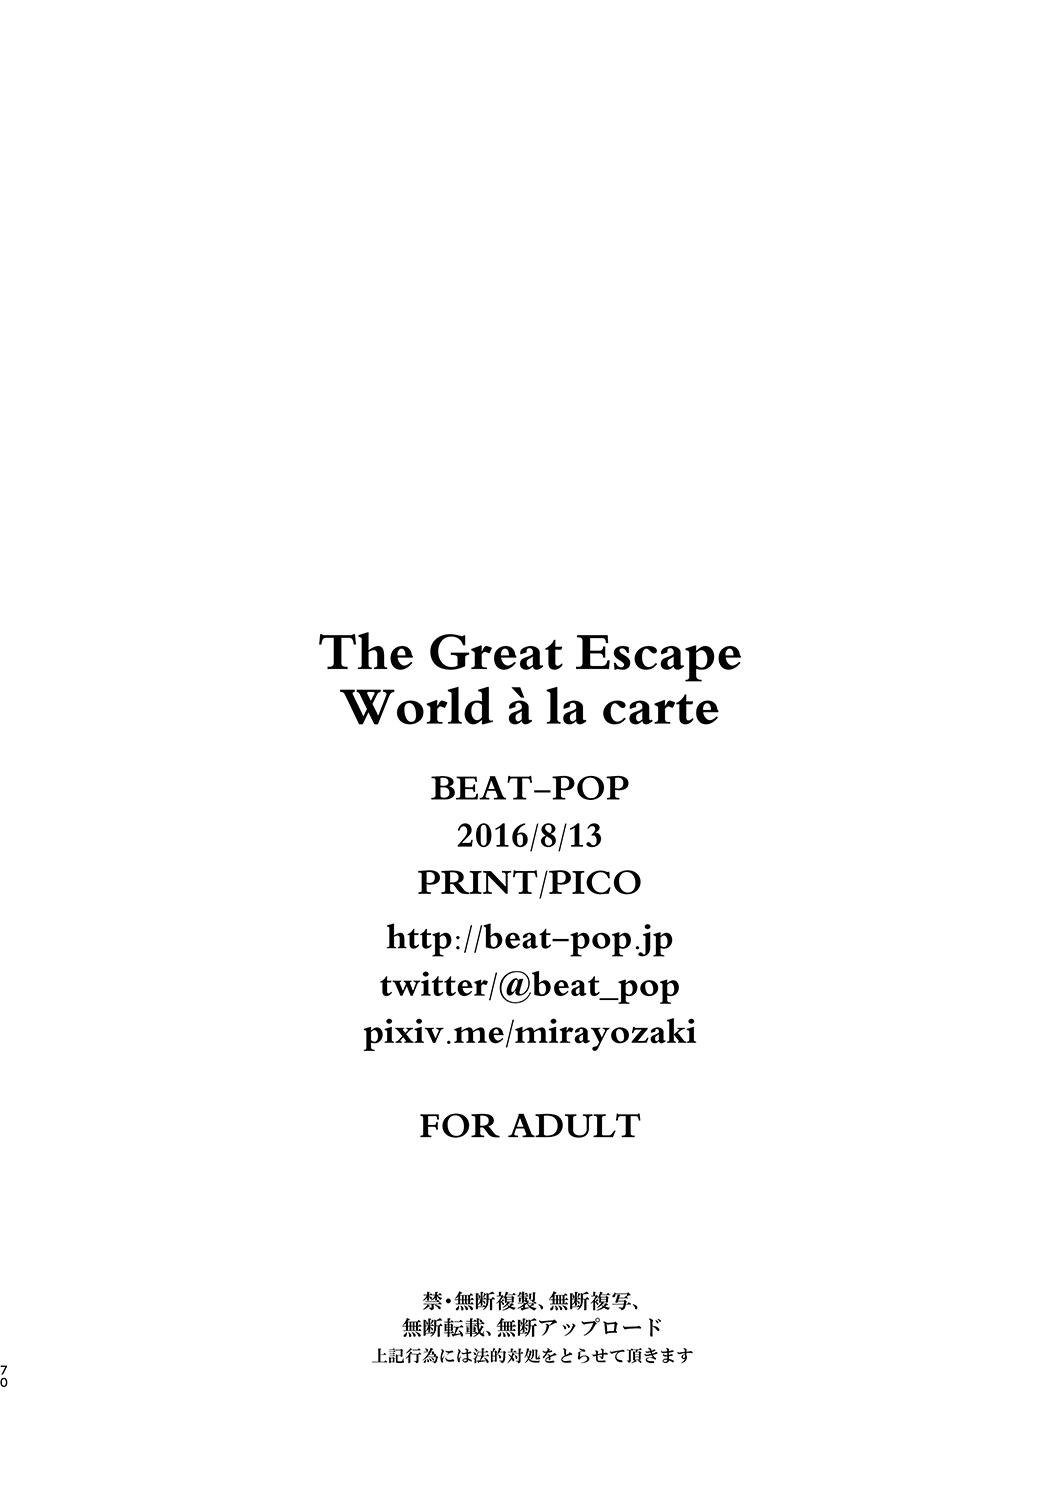 The Great Escape - World à la carte 29